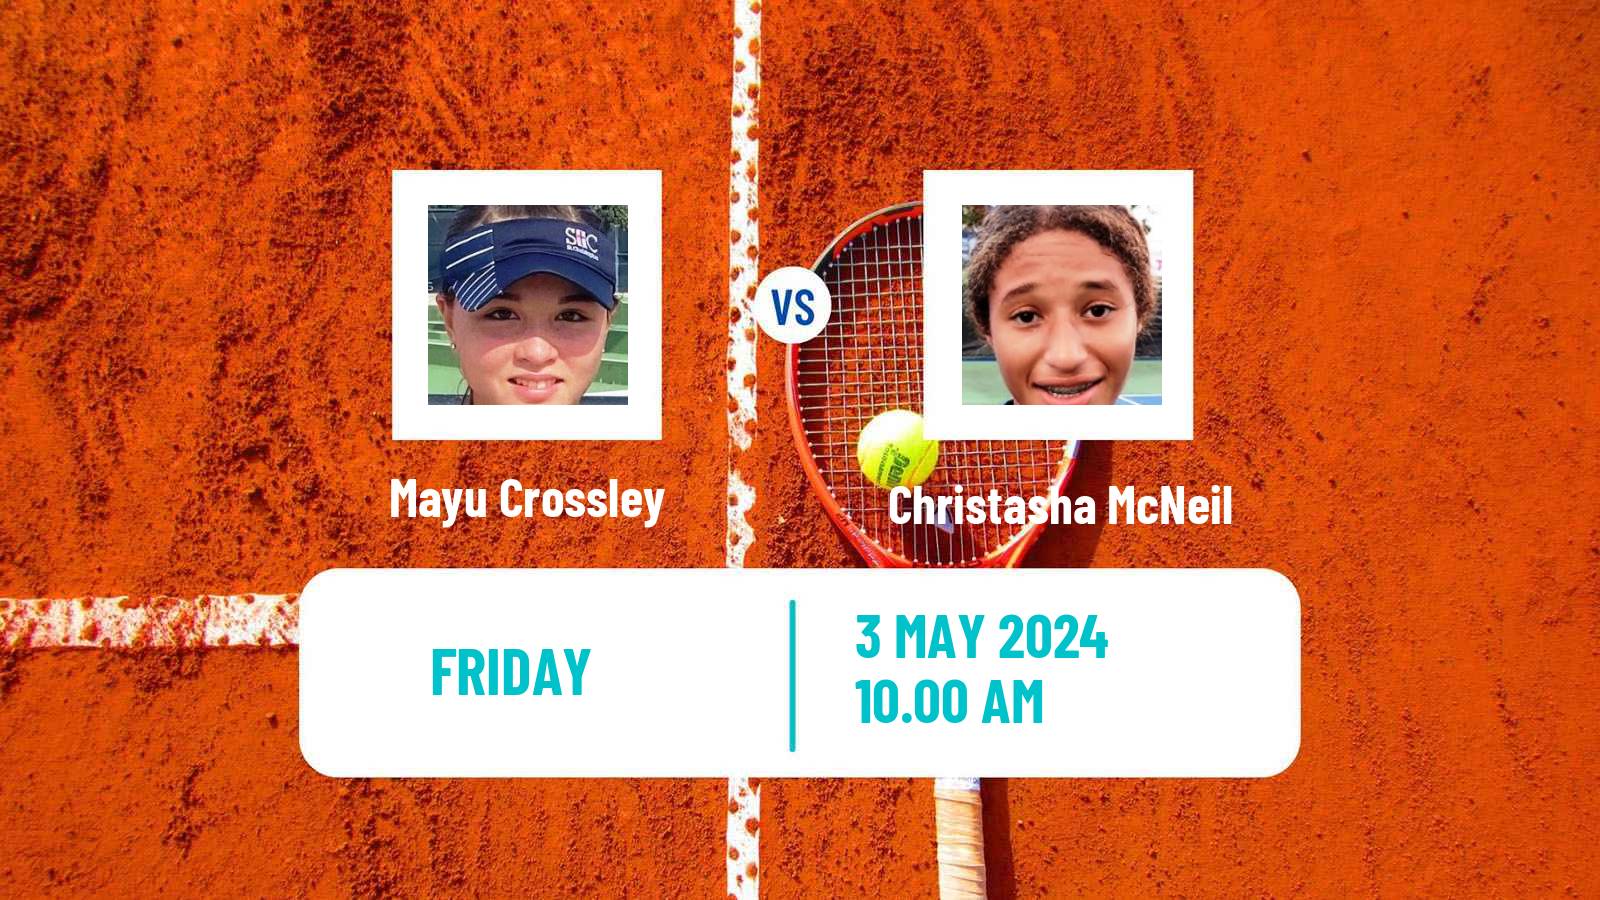 Tennis ITF W35 Boca Raton Fl 2 Women Mayu Crossley - Christasha McNeil